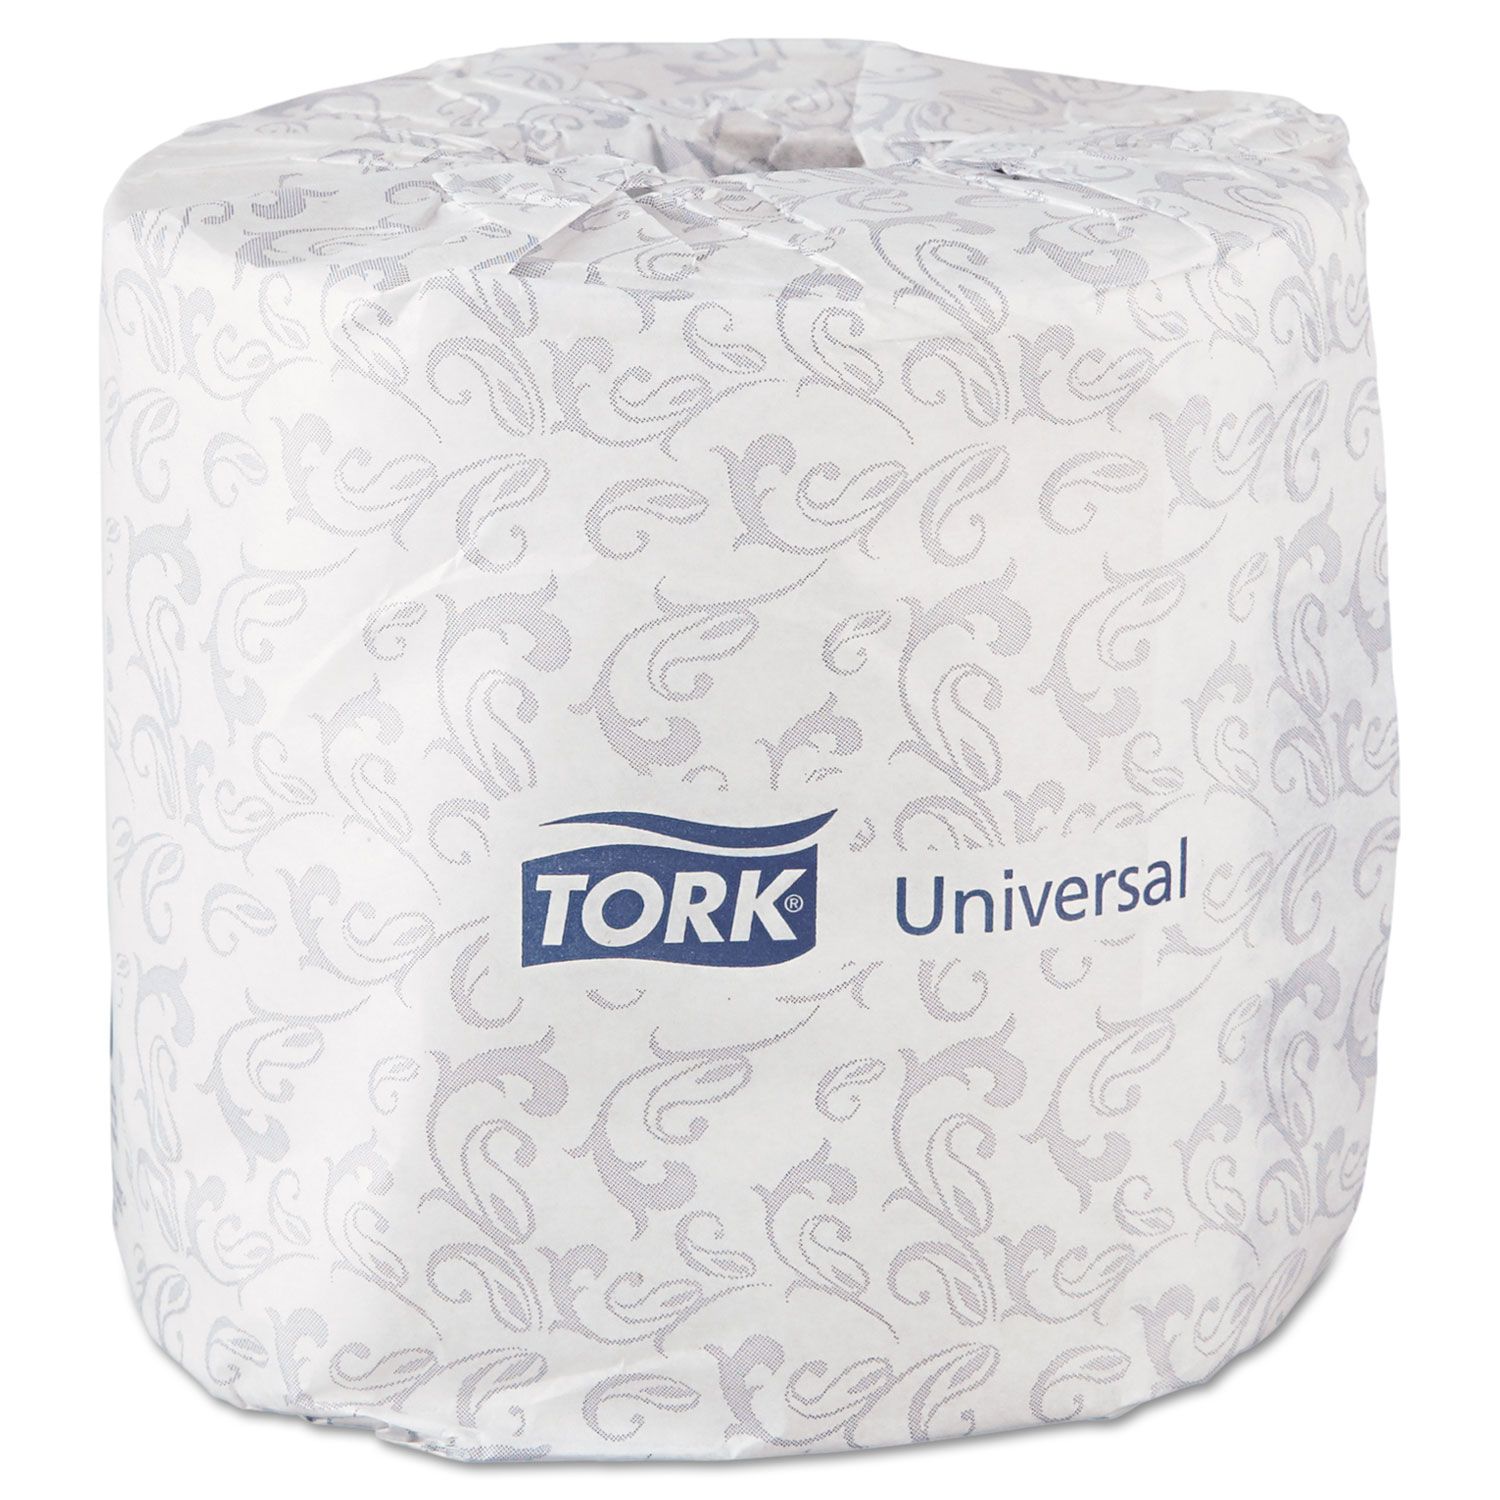 Univ. Bath Tissue, 1-Ply, White, 4 x 3 4/5, 1000 Sheets/Roll, 96 Rolls/Carton